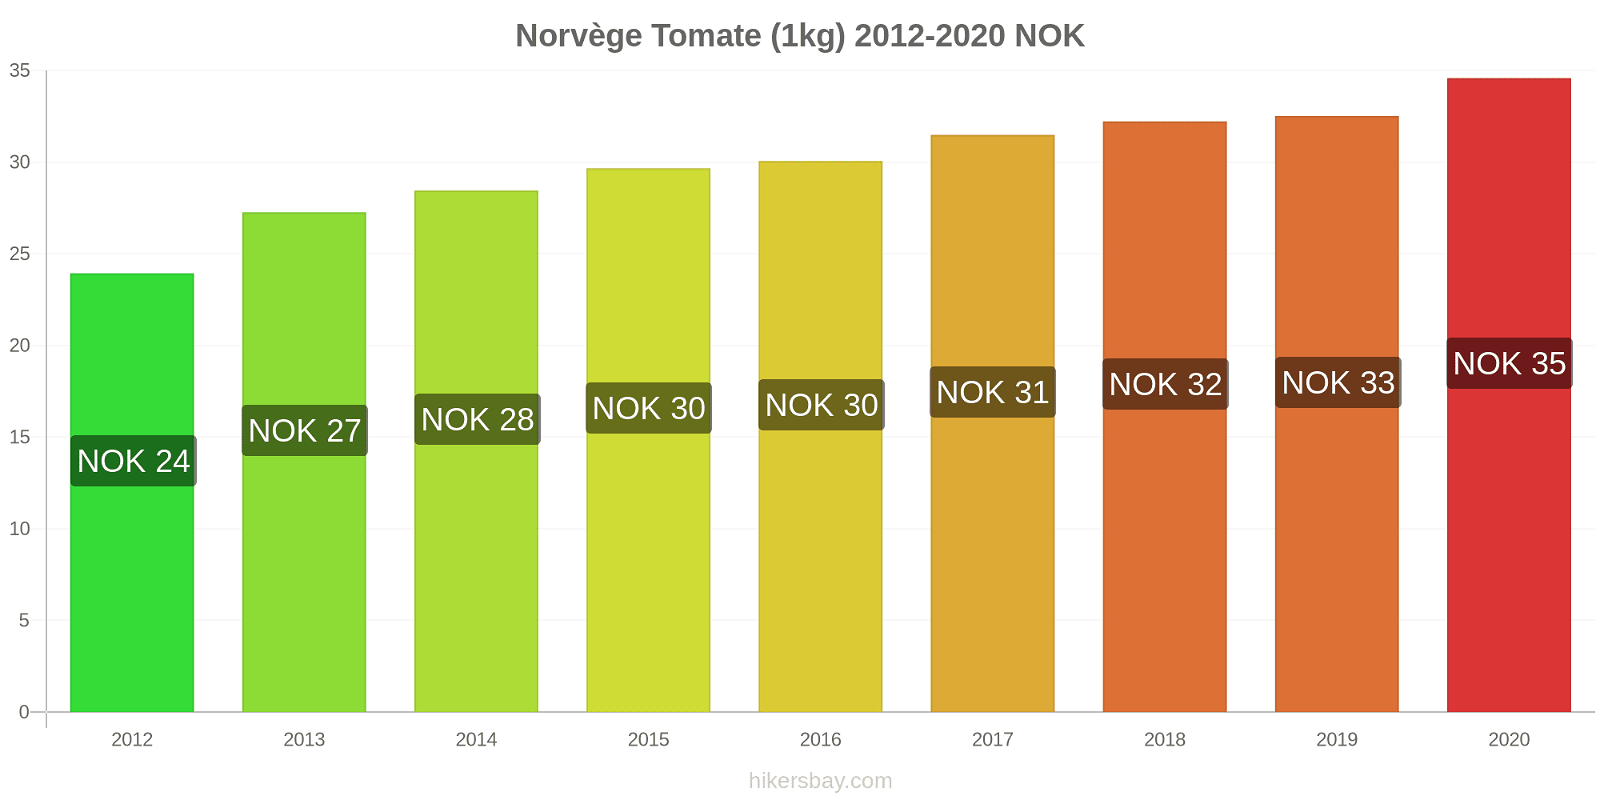 Norvège changements de prix Tomate (1kg) hikersbay.com